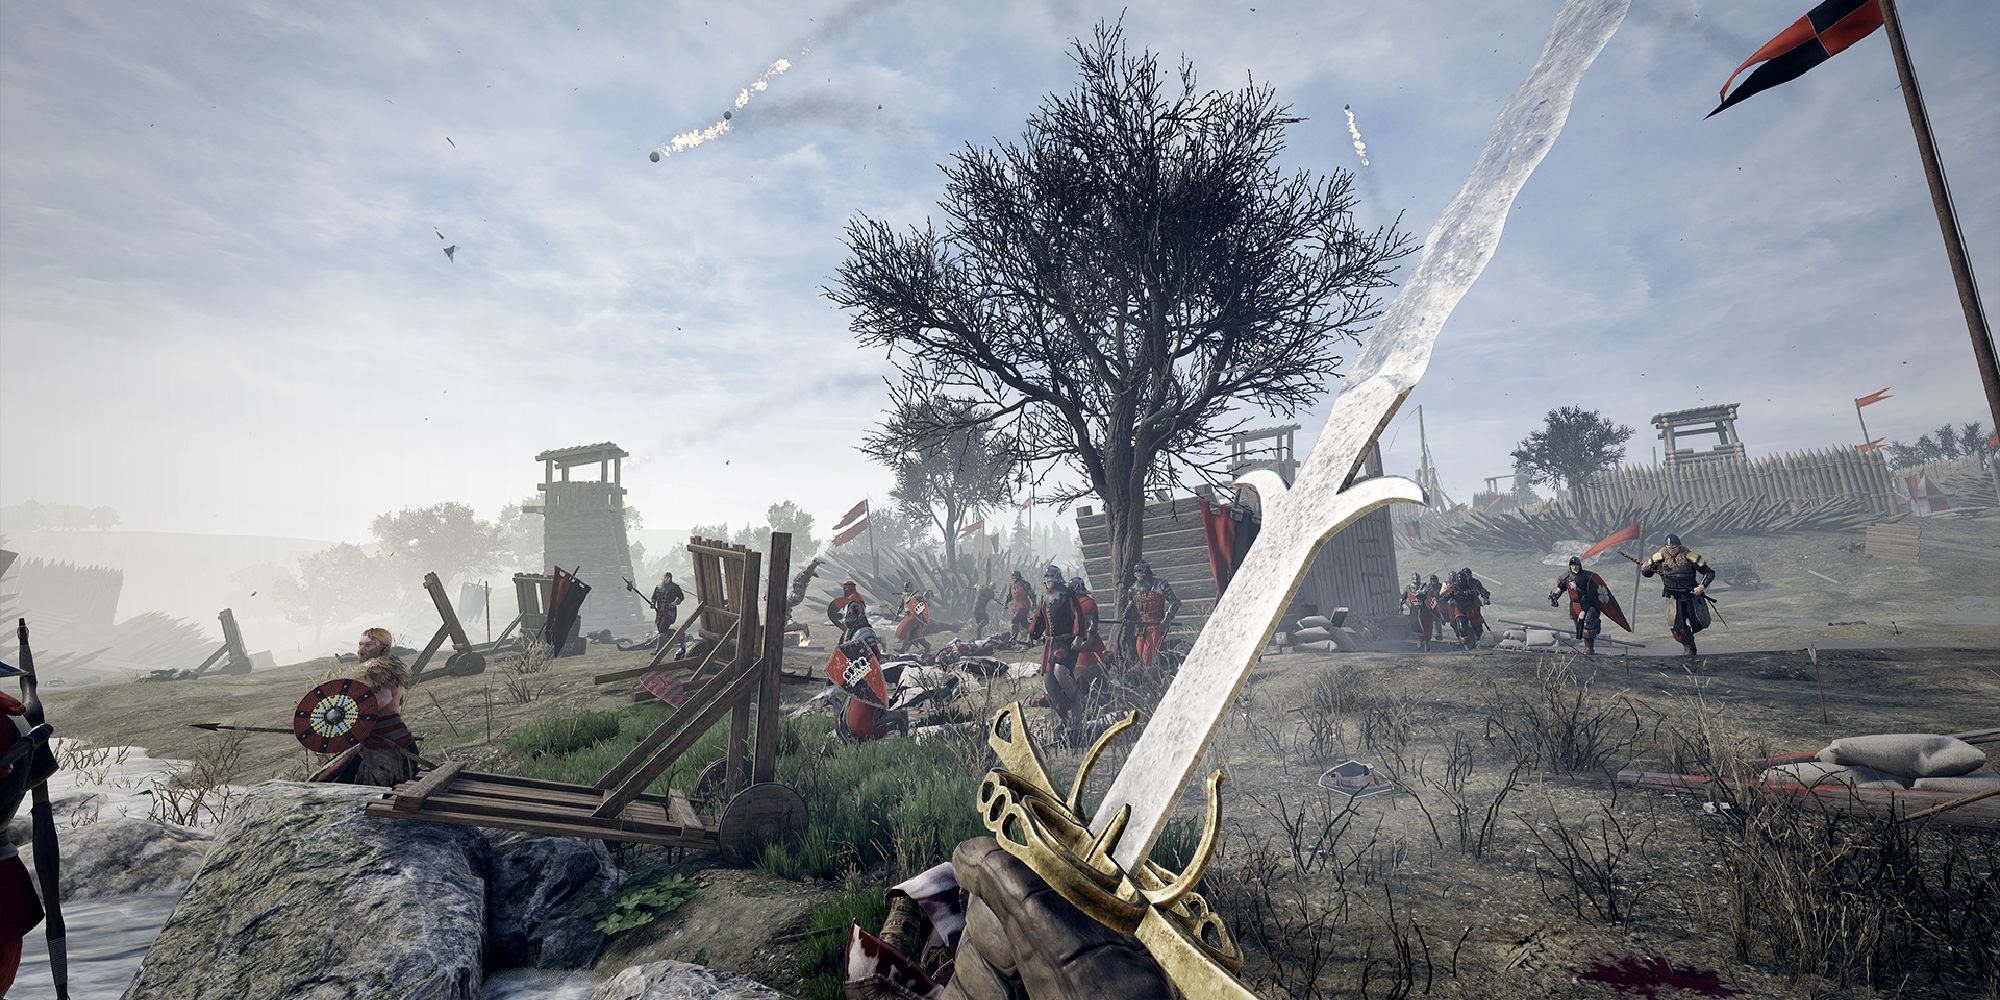 A player holding a sword gazes at a dangerous battlefield in Mordhau